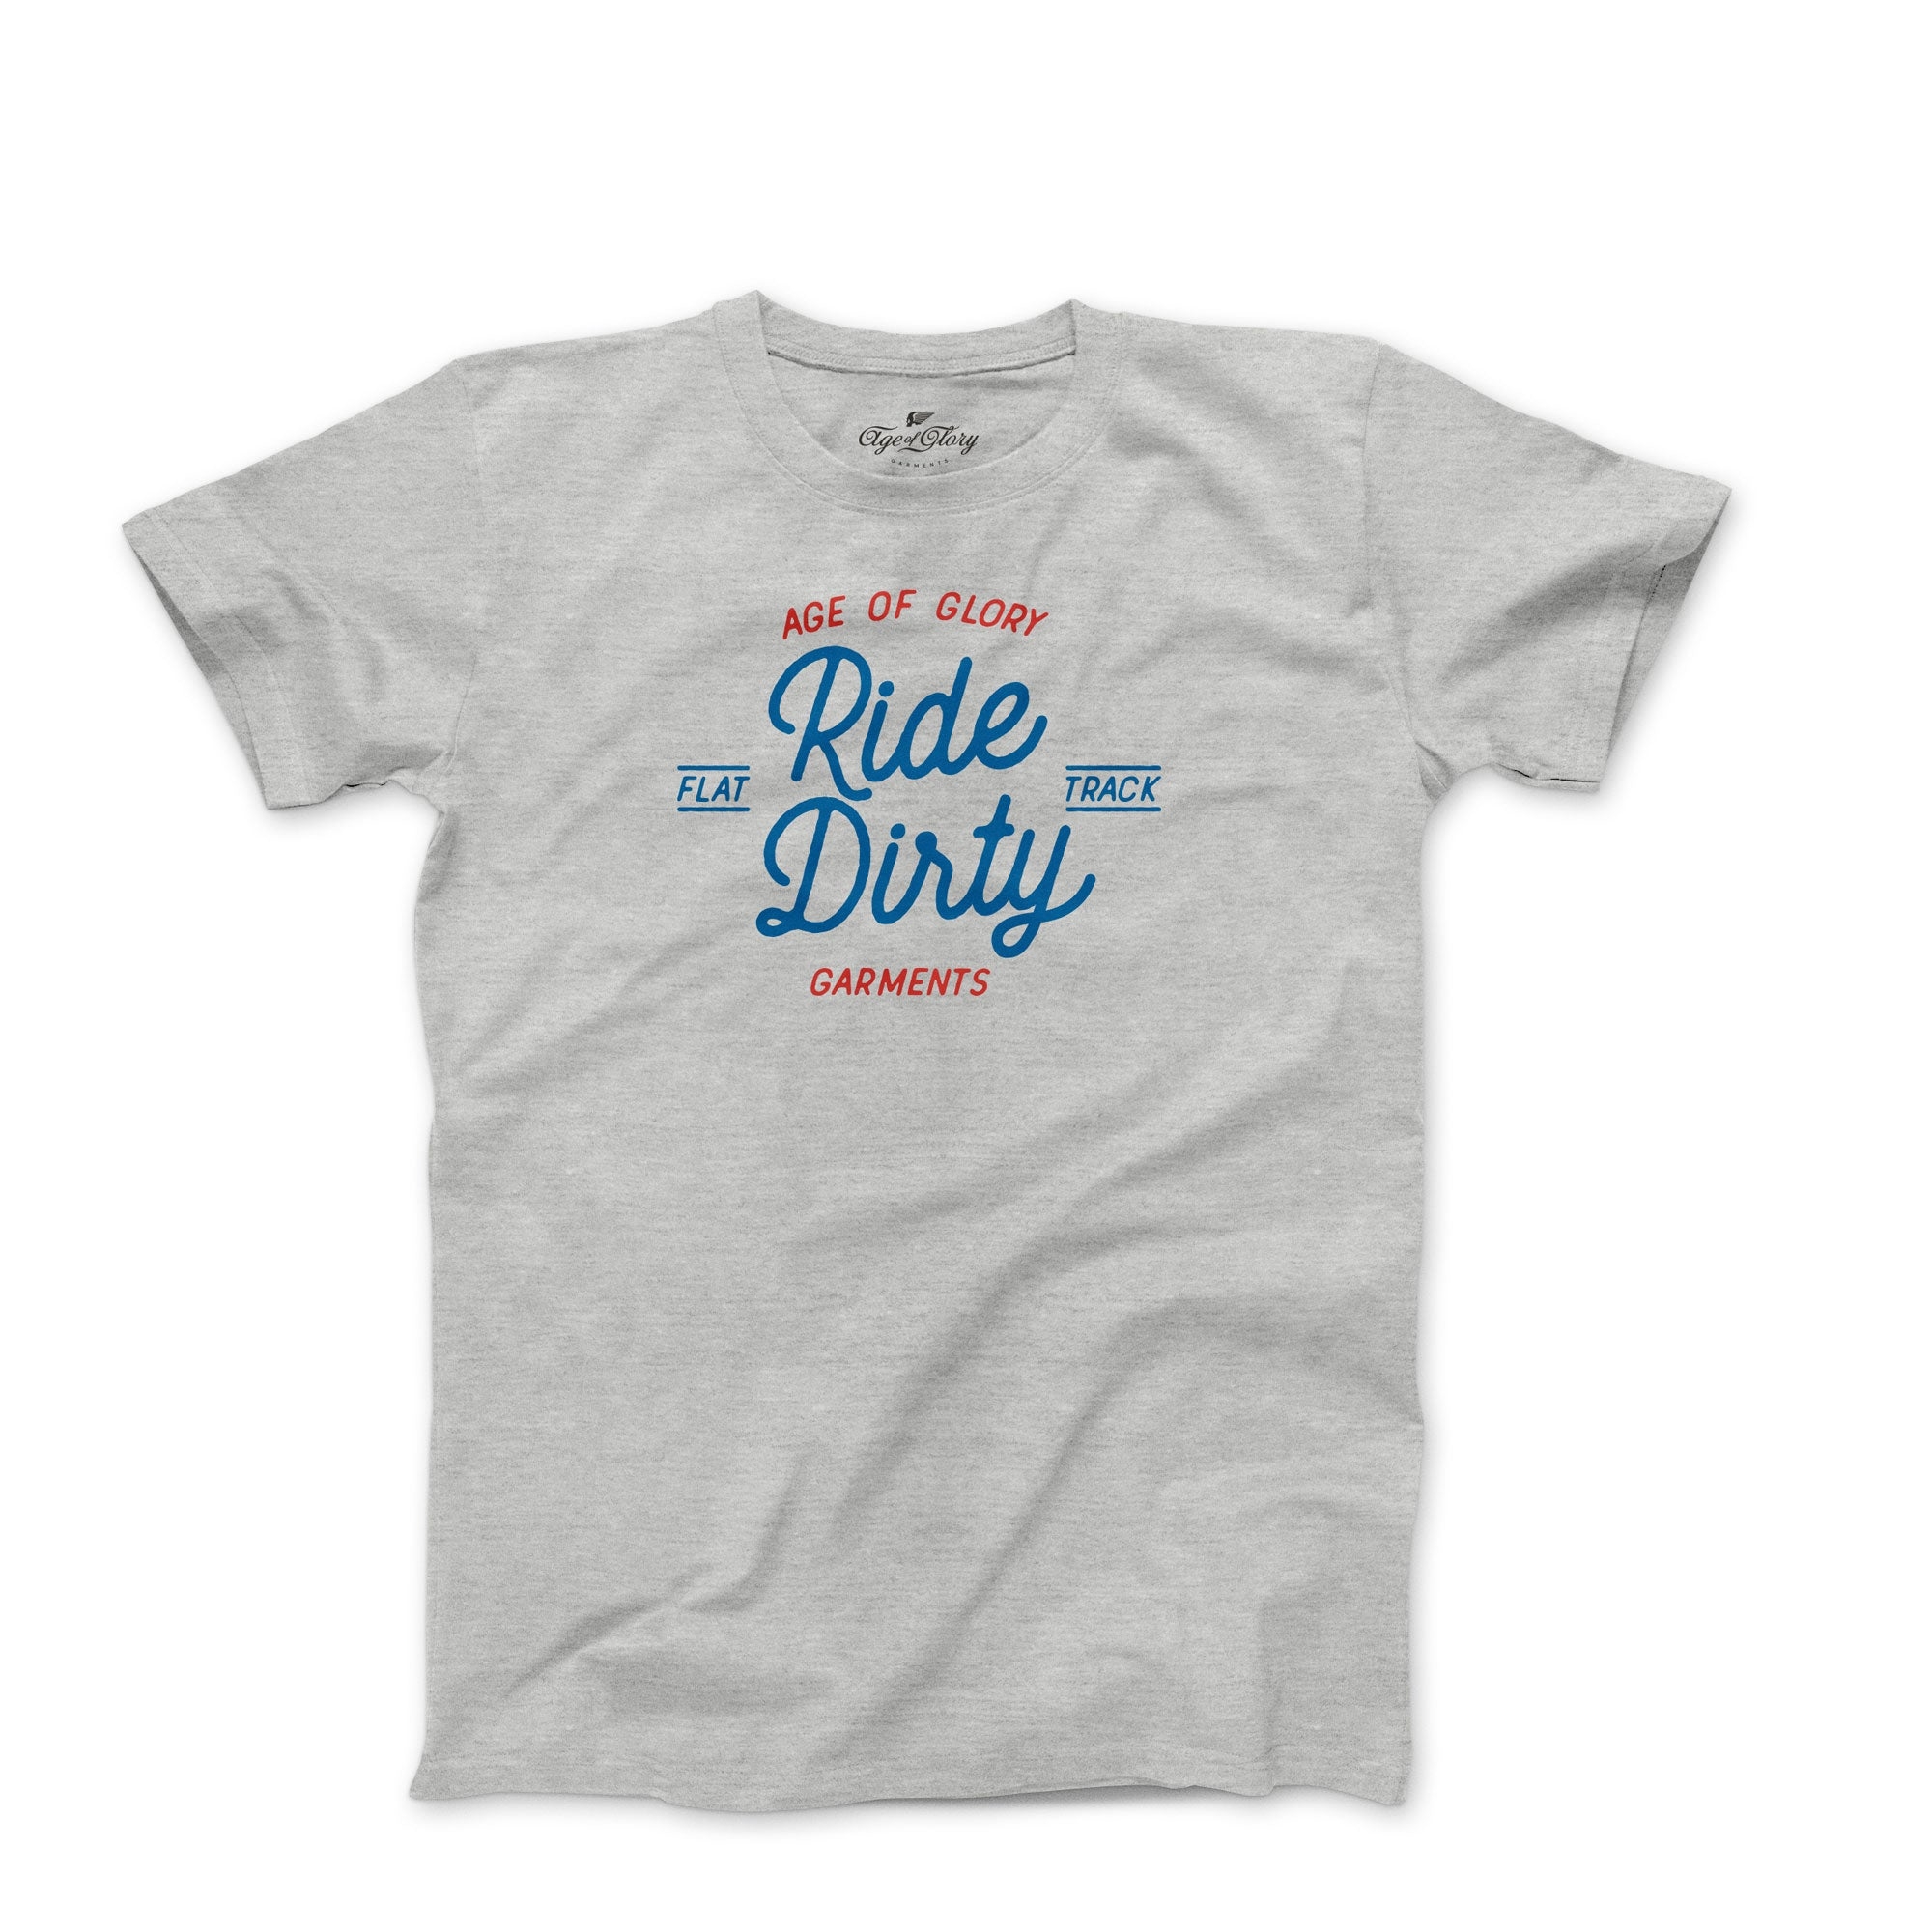 Age of Glory Ride Dirty Tee-shirt Heather Grey M – Armadillo Customs